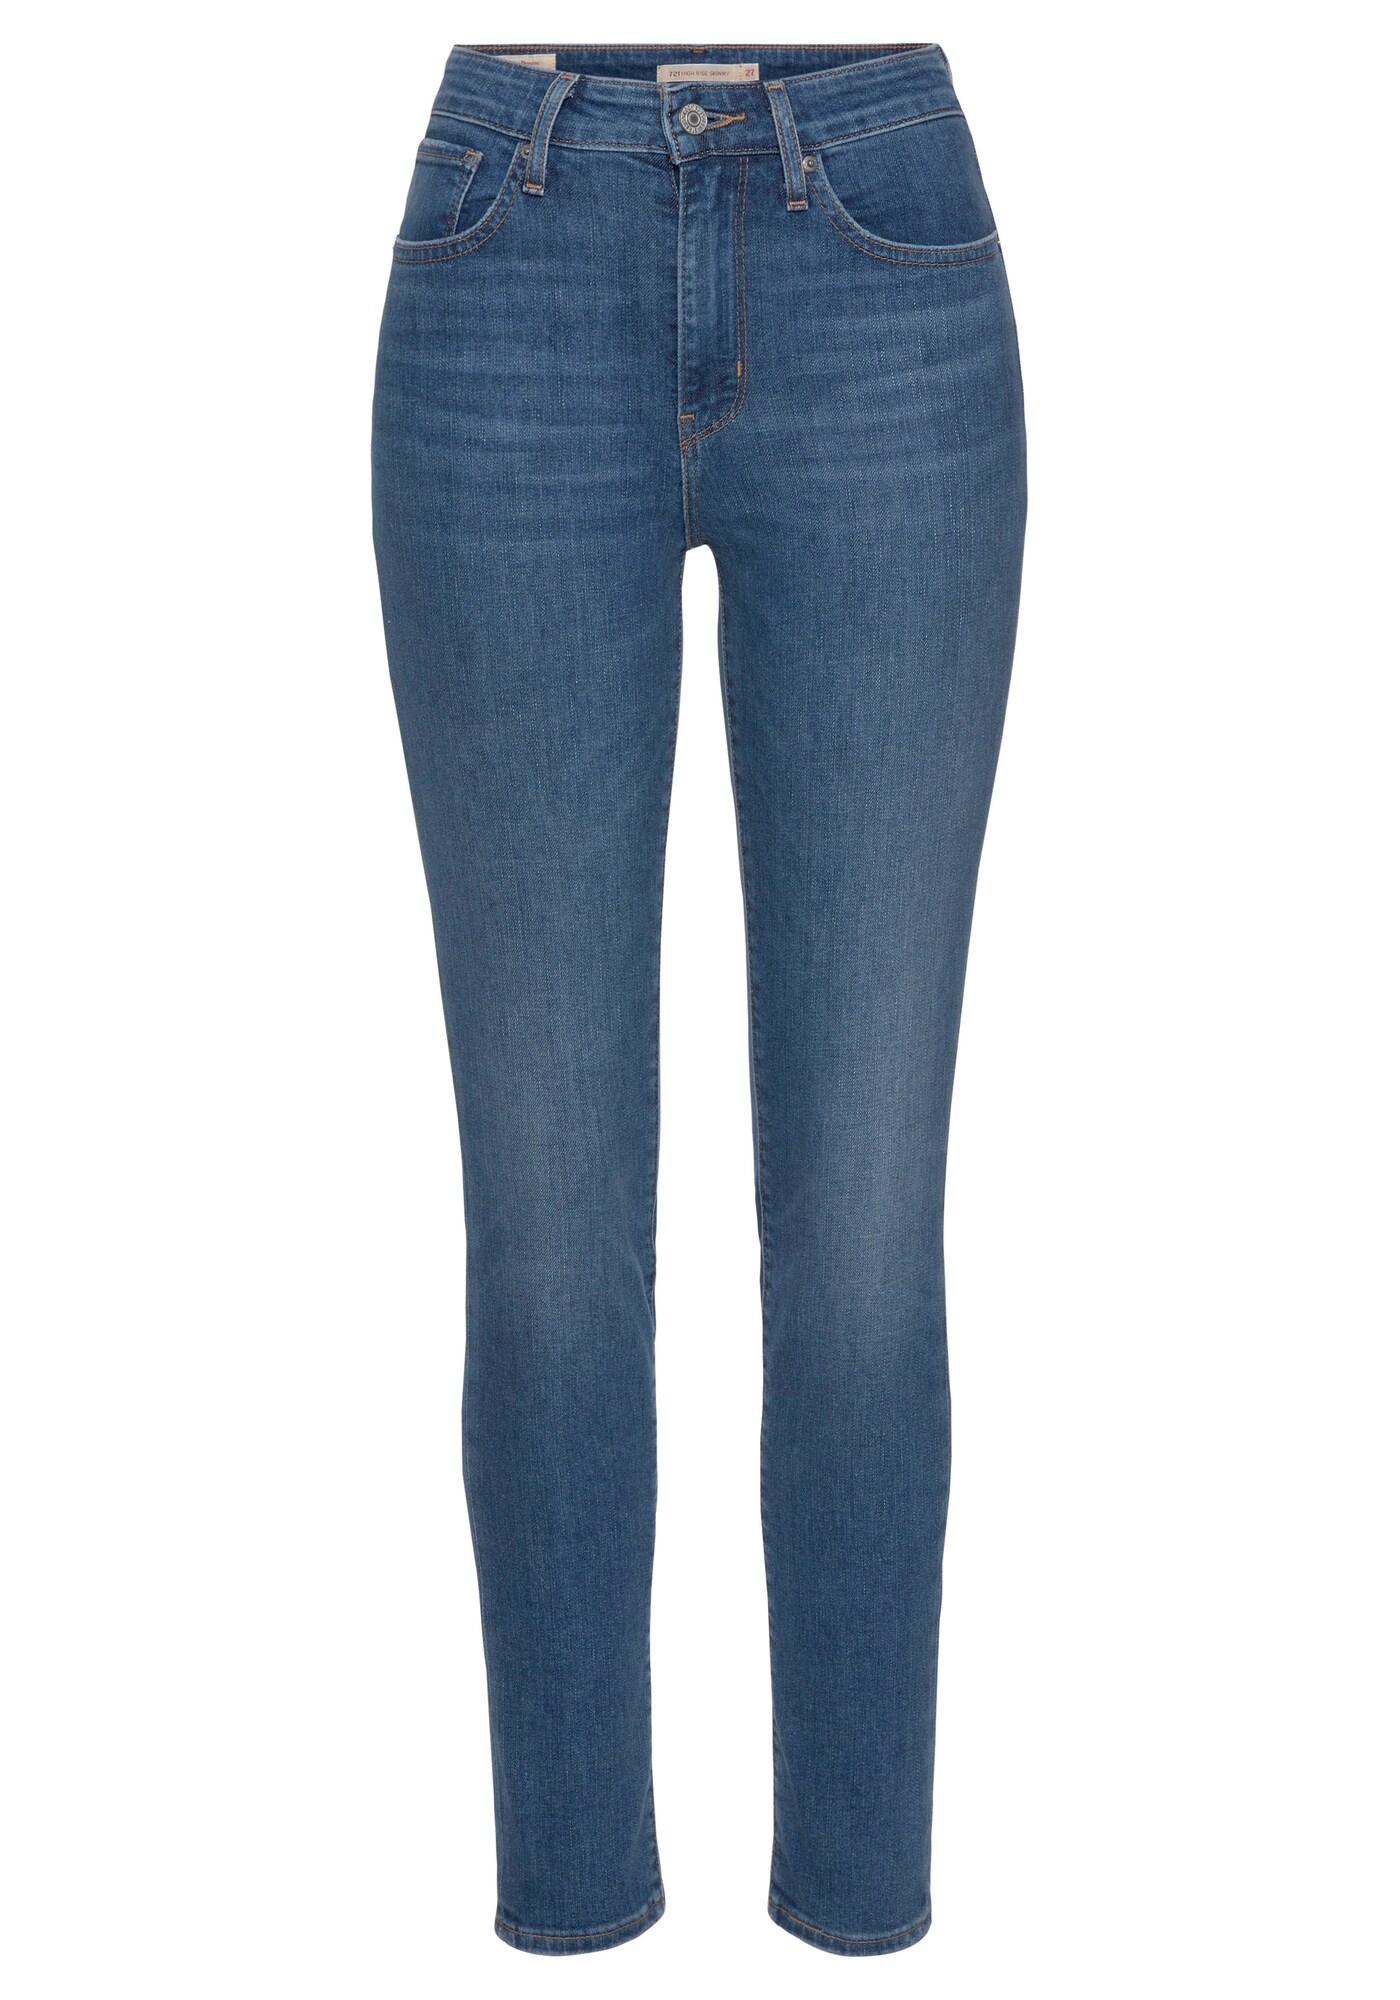 Jeans '721 HIGH RISE SKINNY' von Levis